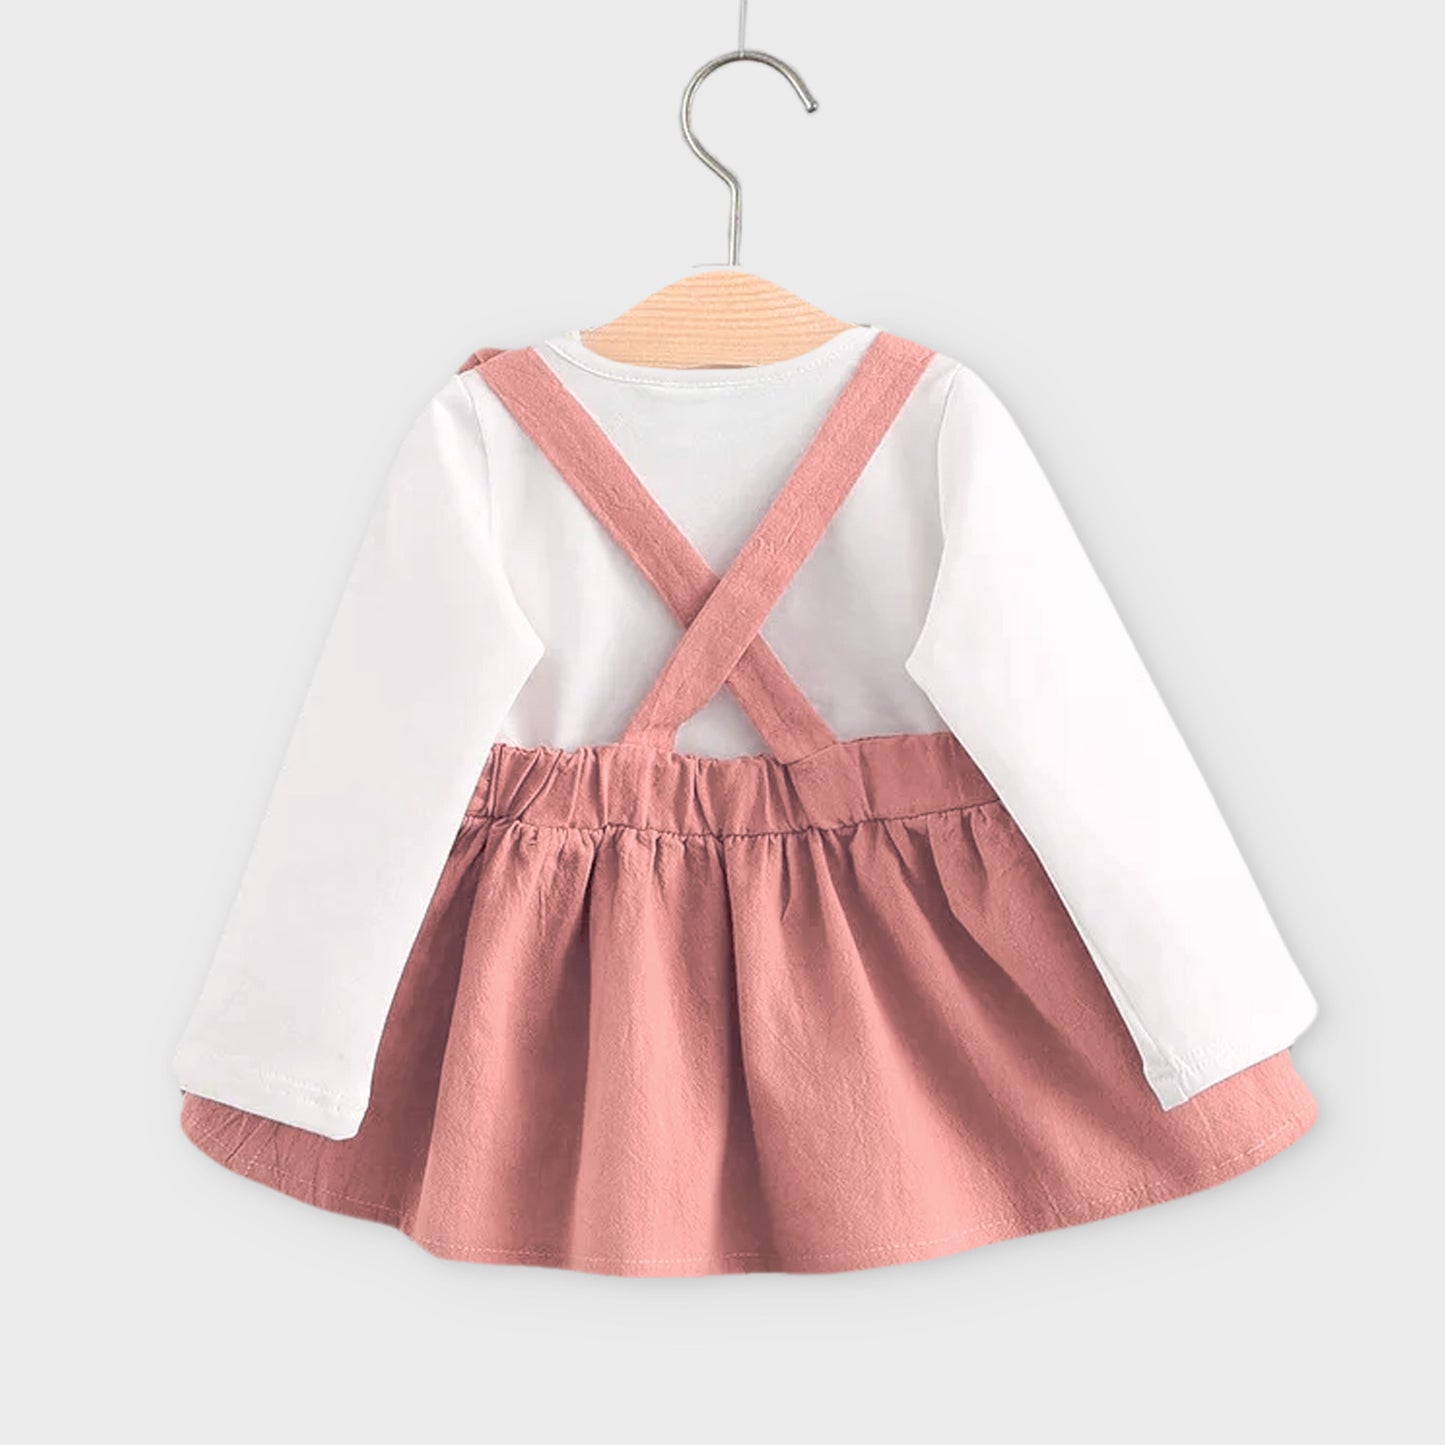 Girls Toddler Bunny Style Skirt set (Winter Stuff)